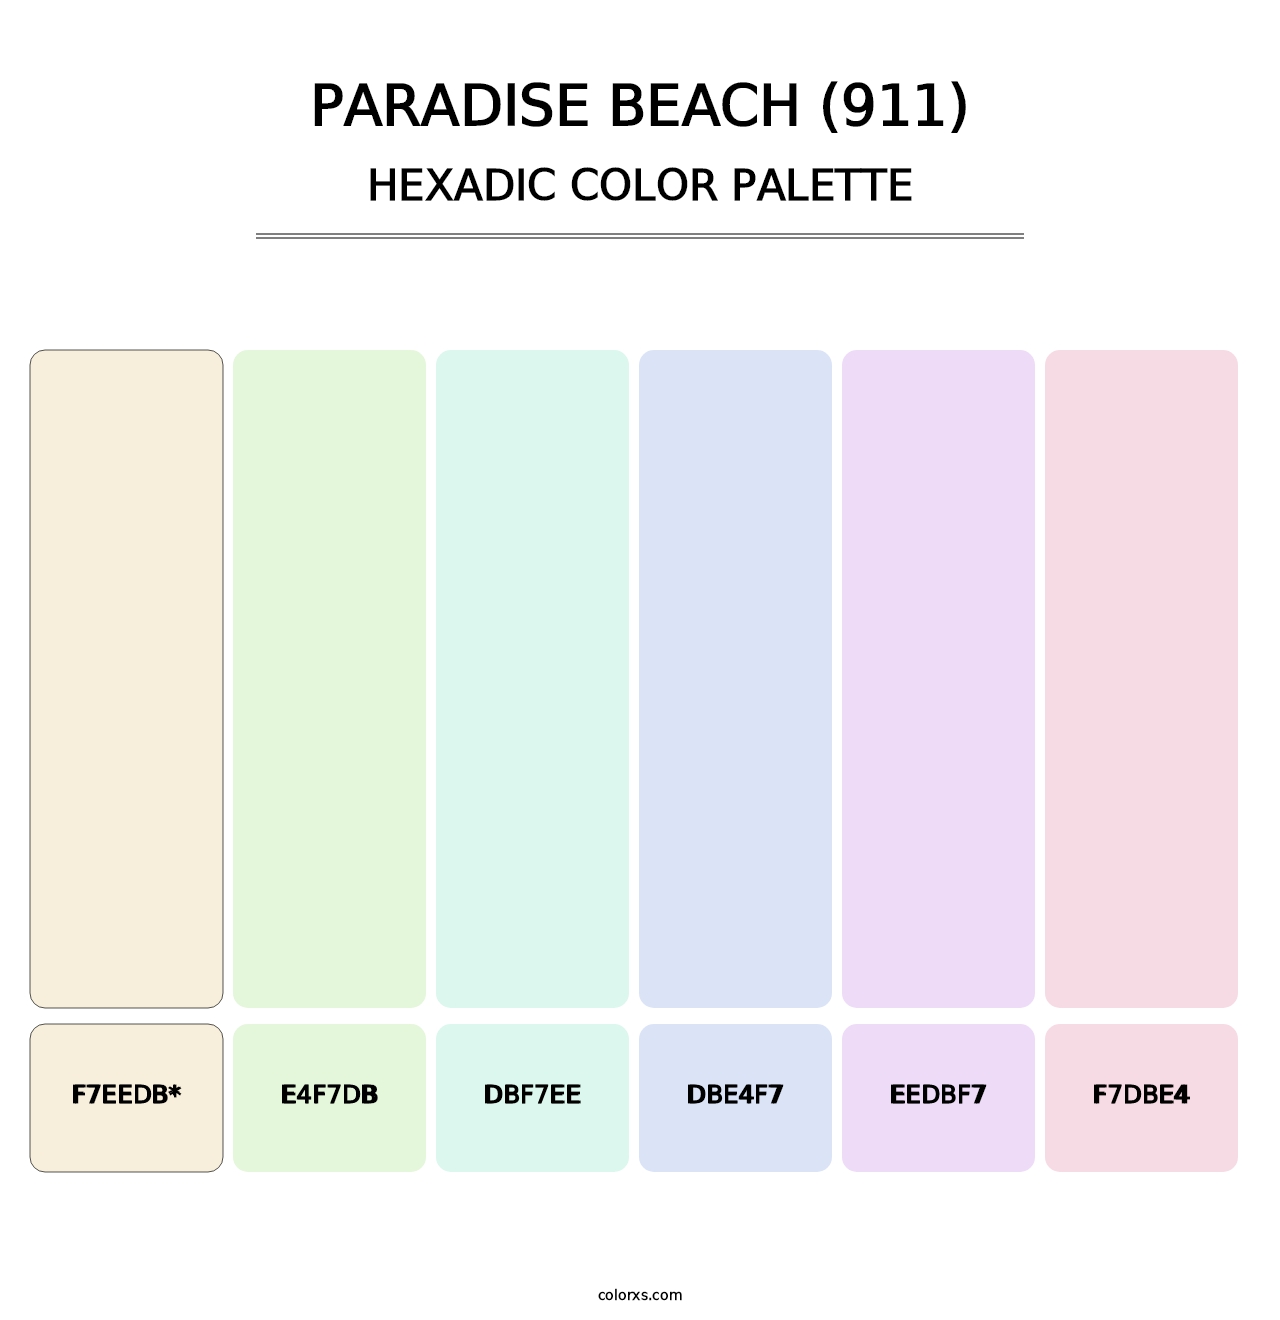 Paradise Beach (911) - Hexadic Color Palette